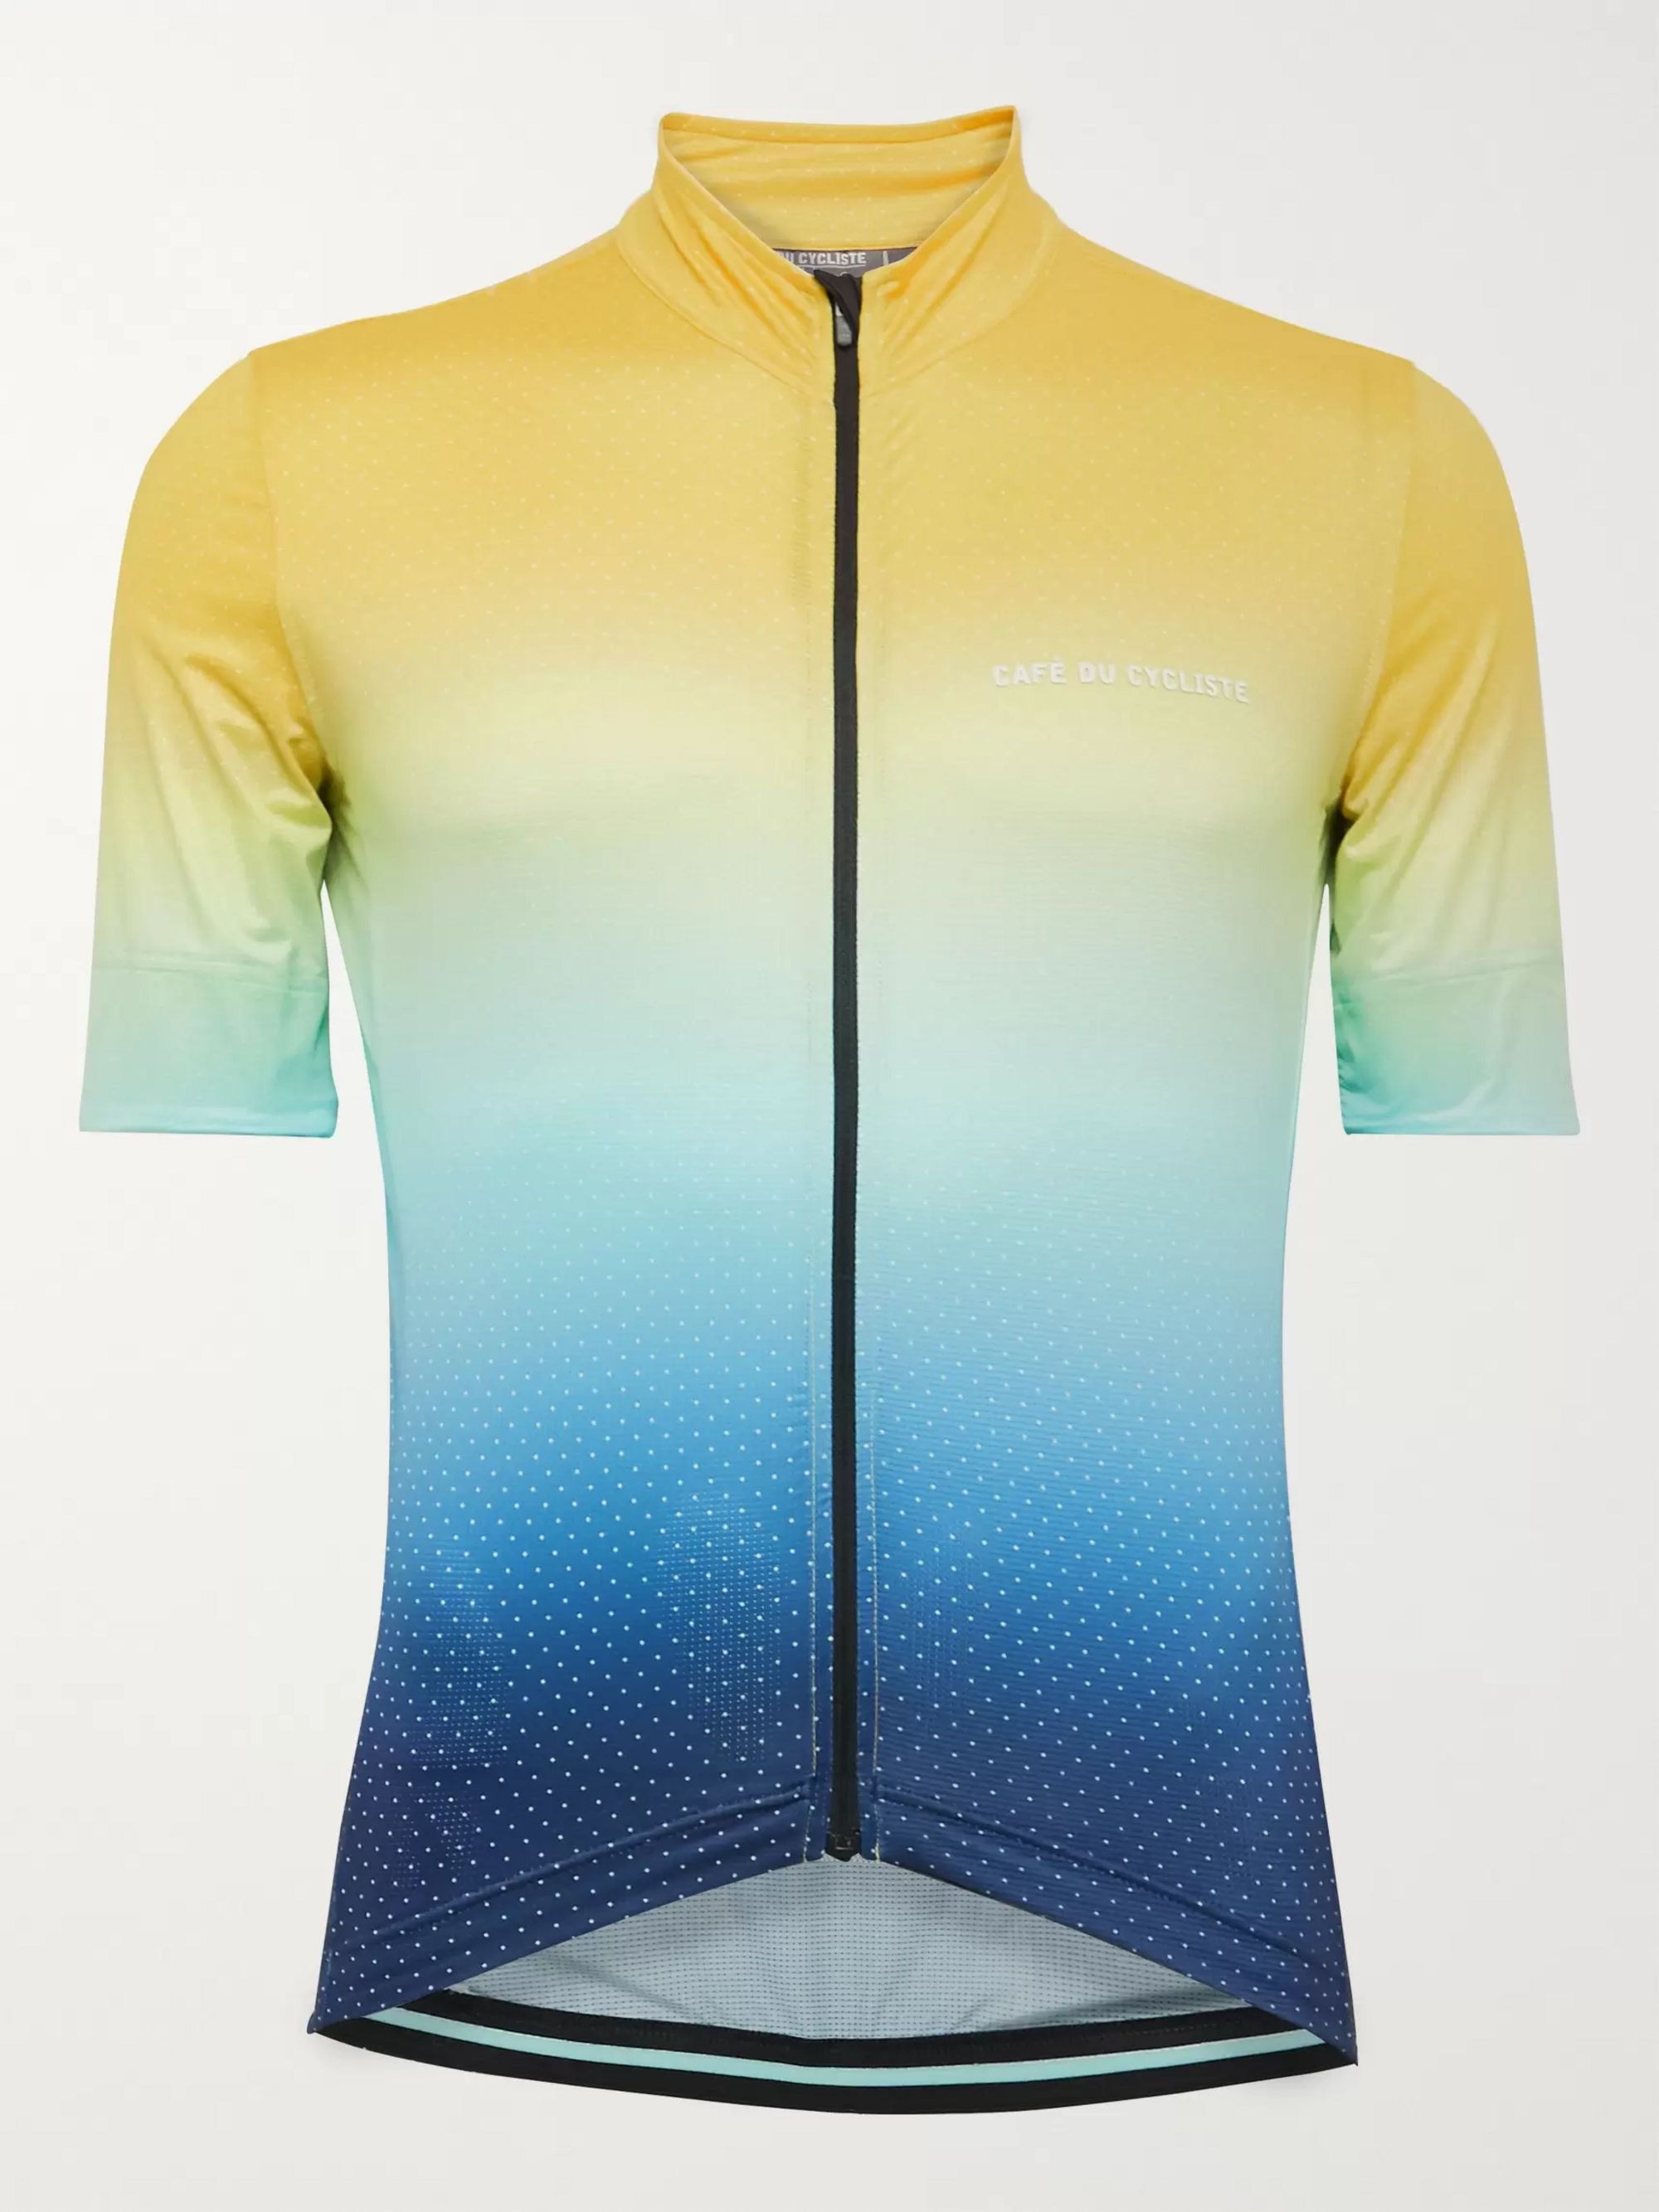 printed cycling jerseys